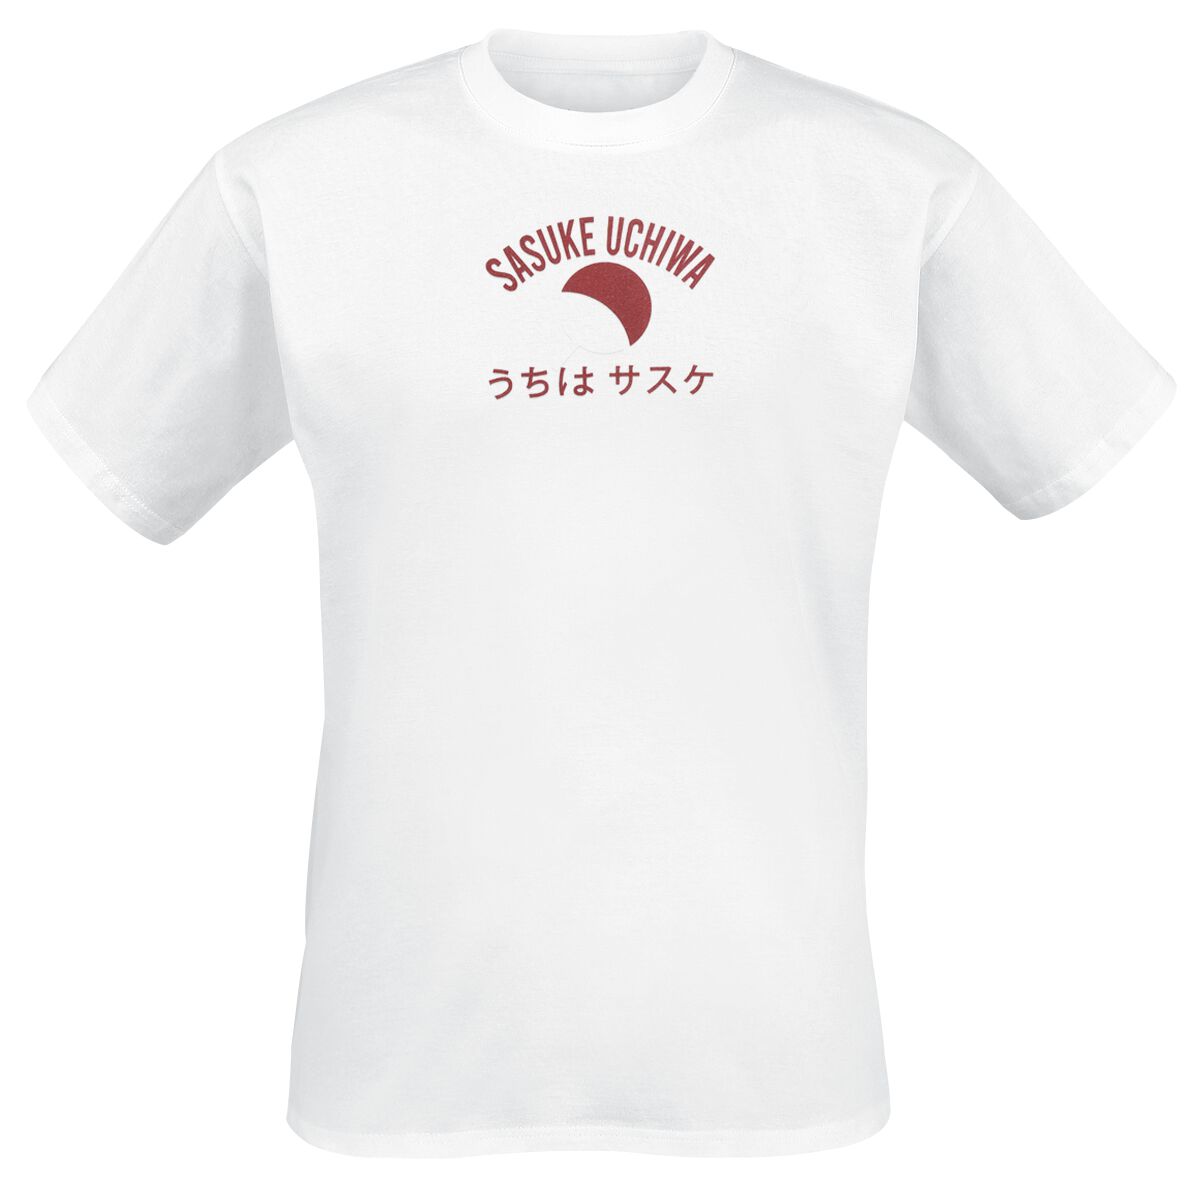 T-Shirt Manches courtes de Naruto - Sasuke Uchiha - Attack - S à XXL - pour Homme - blanc